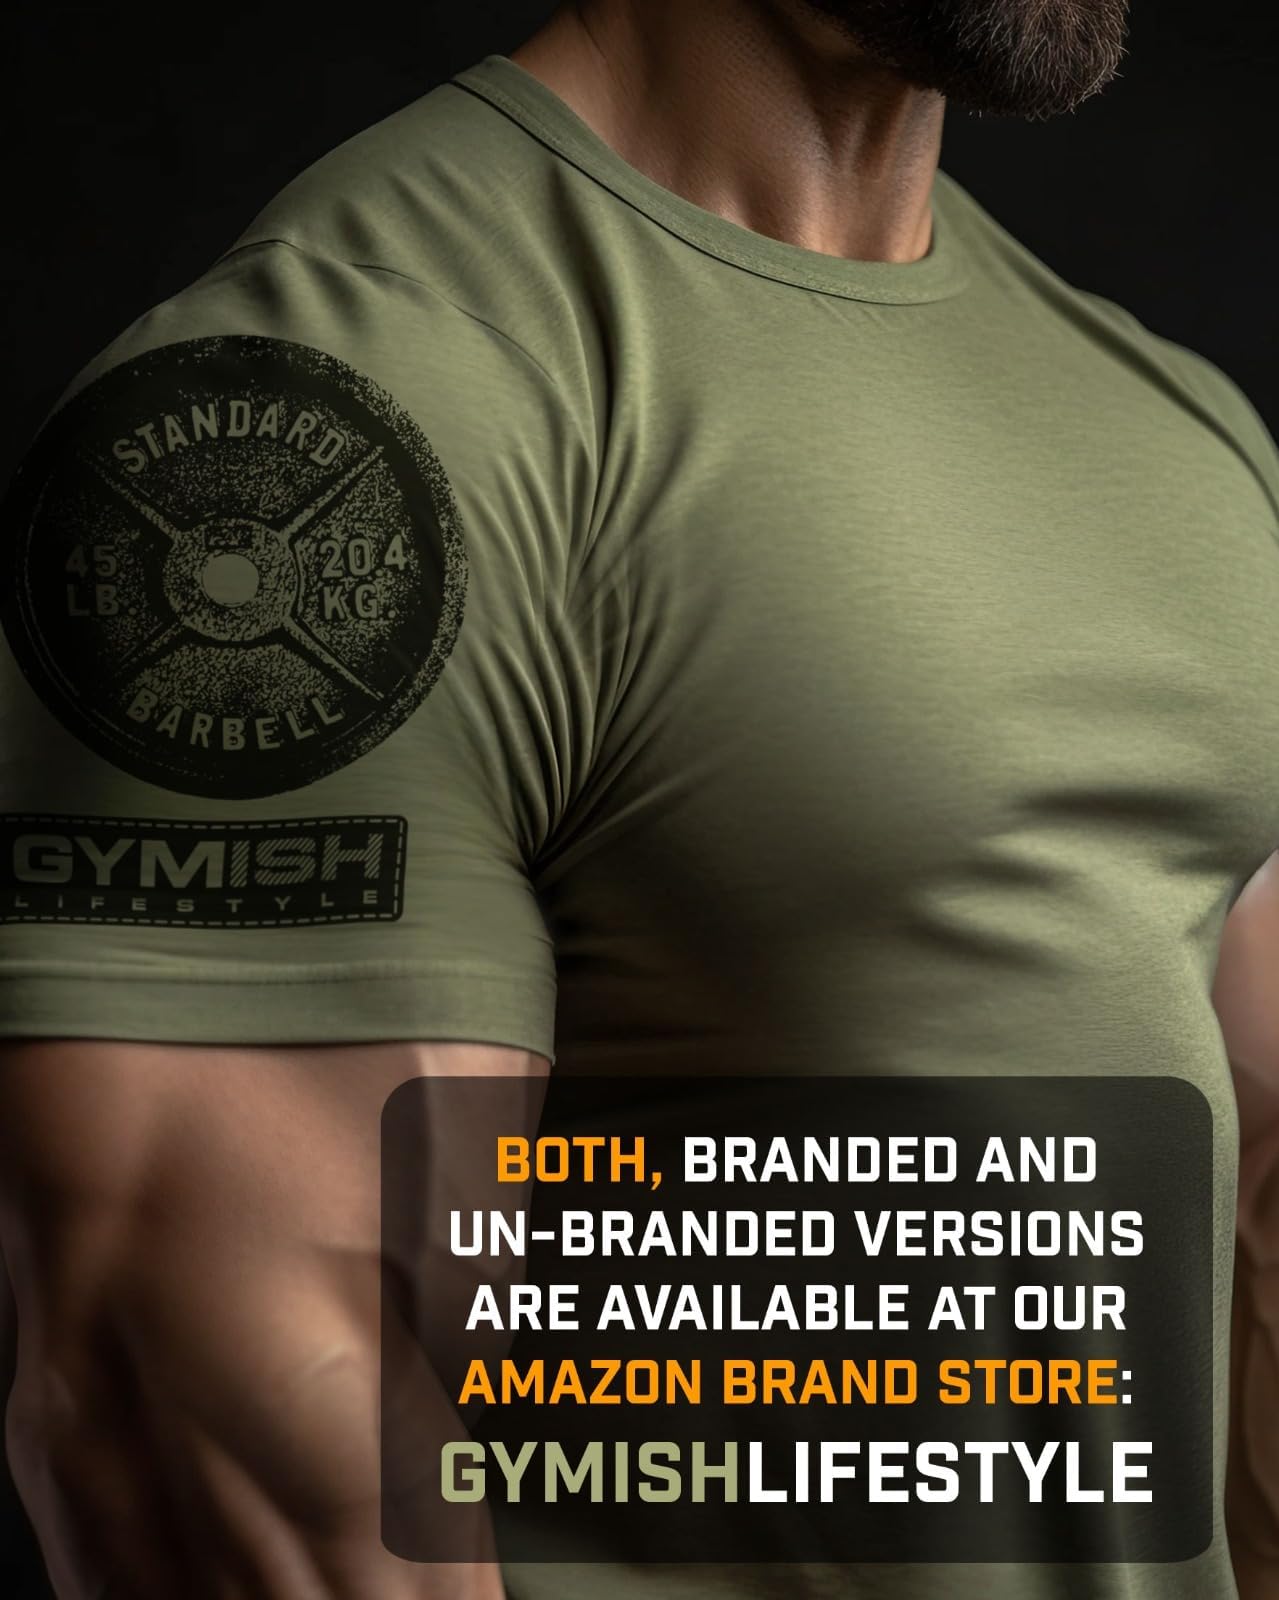 064. Squat Sergeant Workout T-Shirt